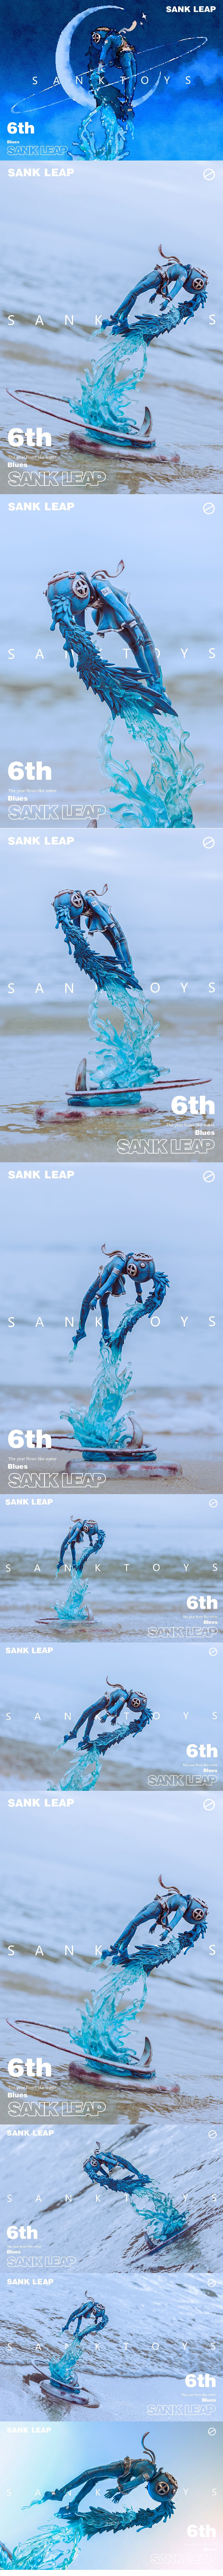 Sank Toys  Leap Blues Collectible Figurine